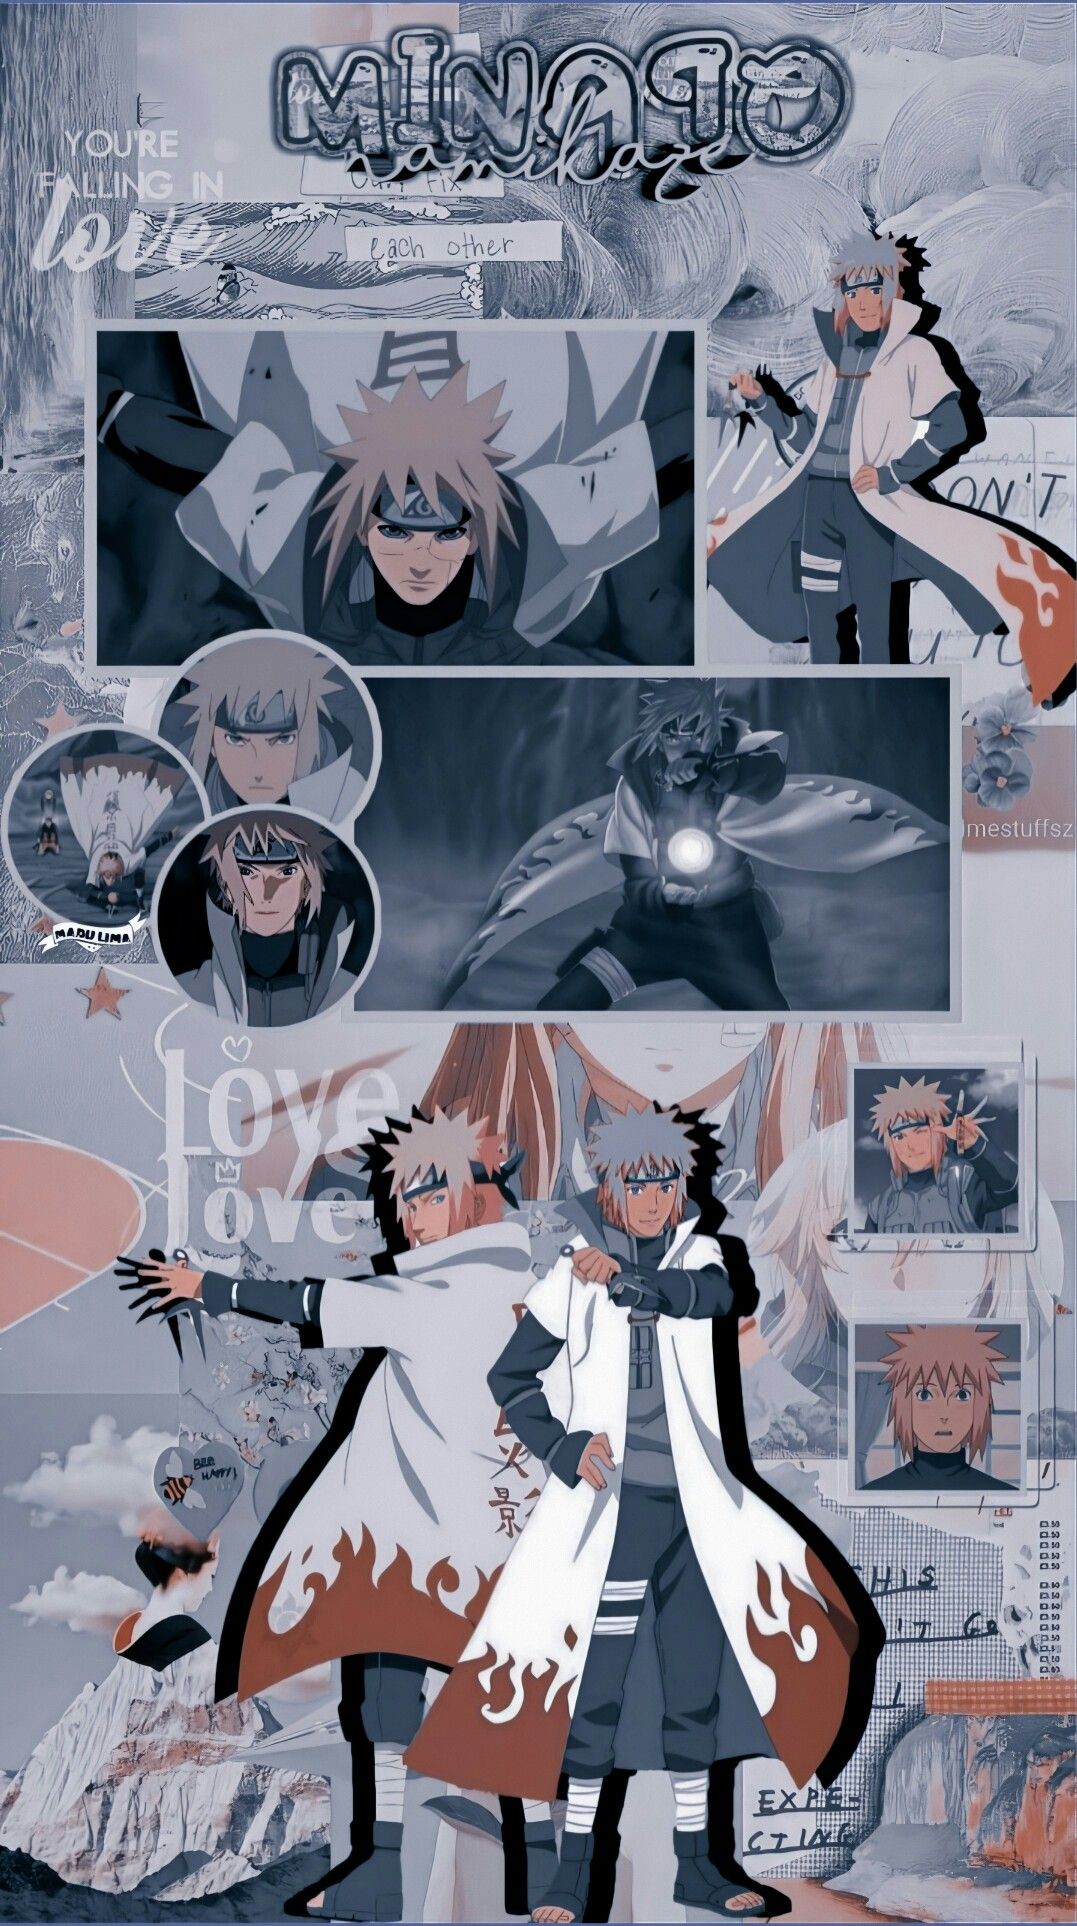 Naruto Aesthetic Minato Wallpapers